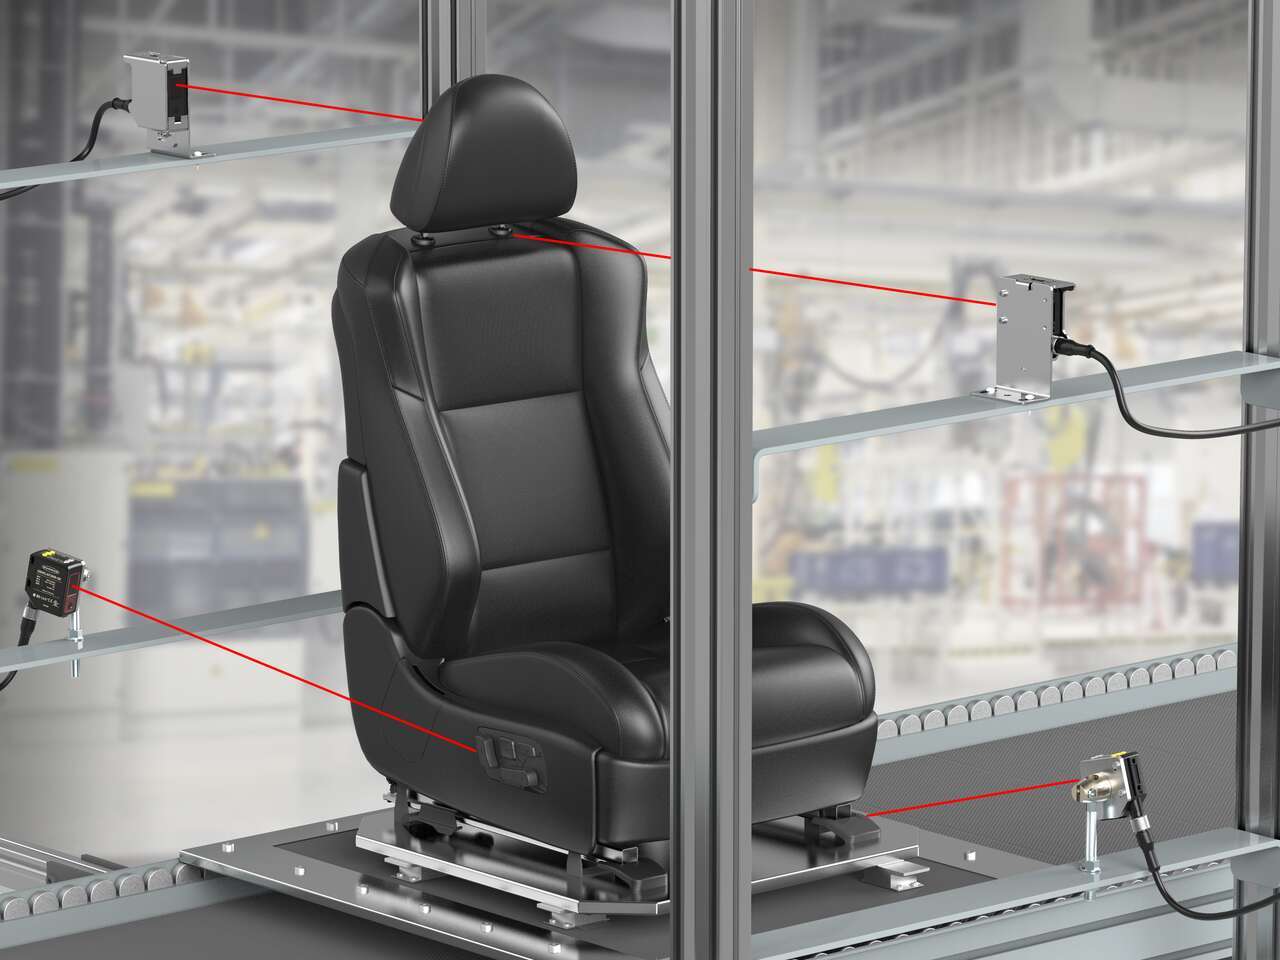 The Q5X sensor detects black components on a black seat